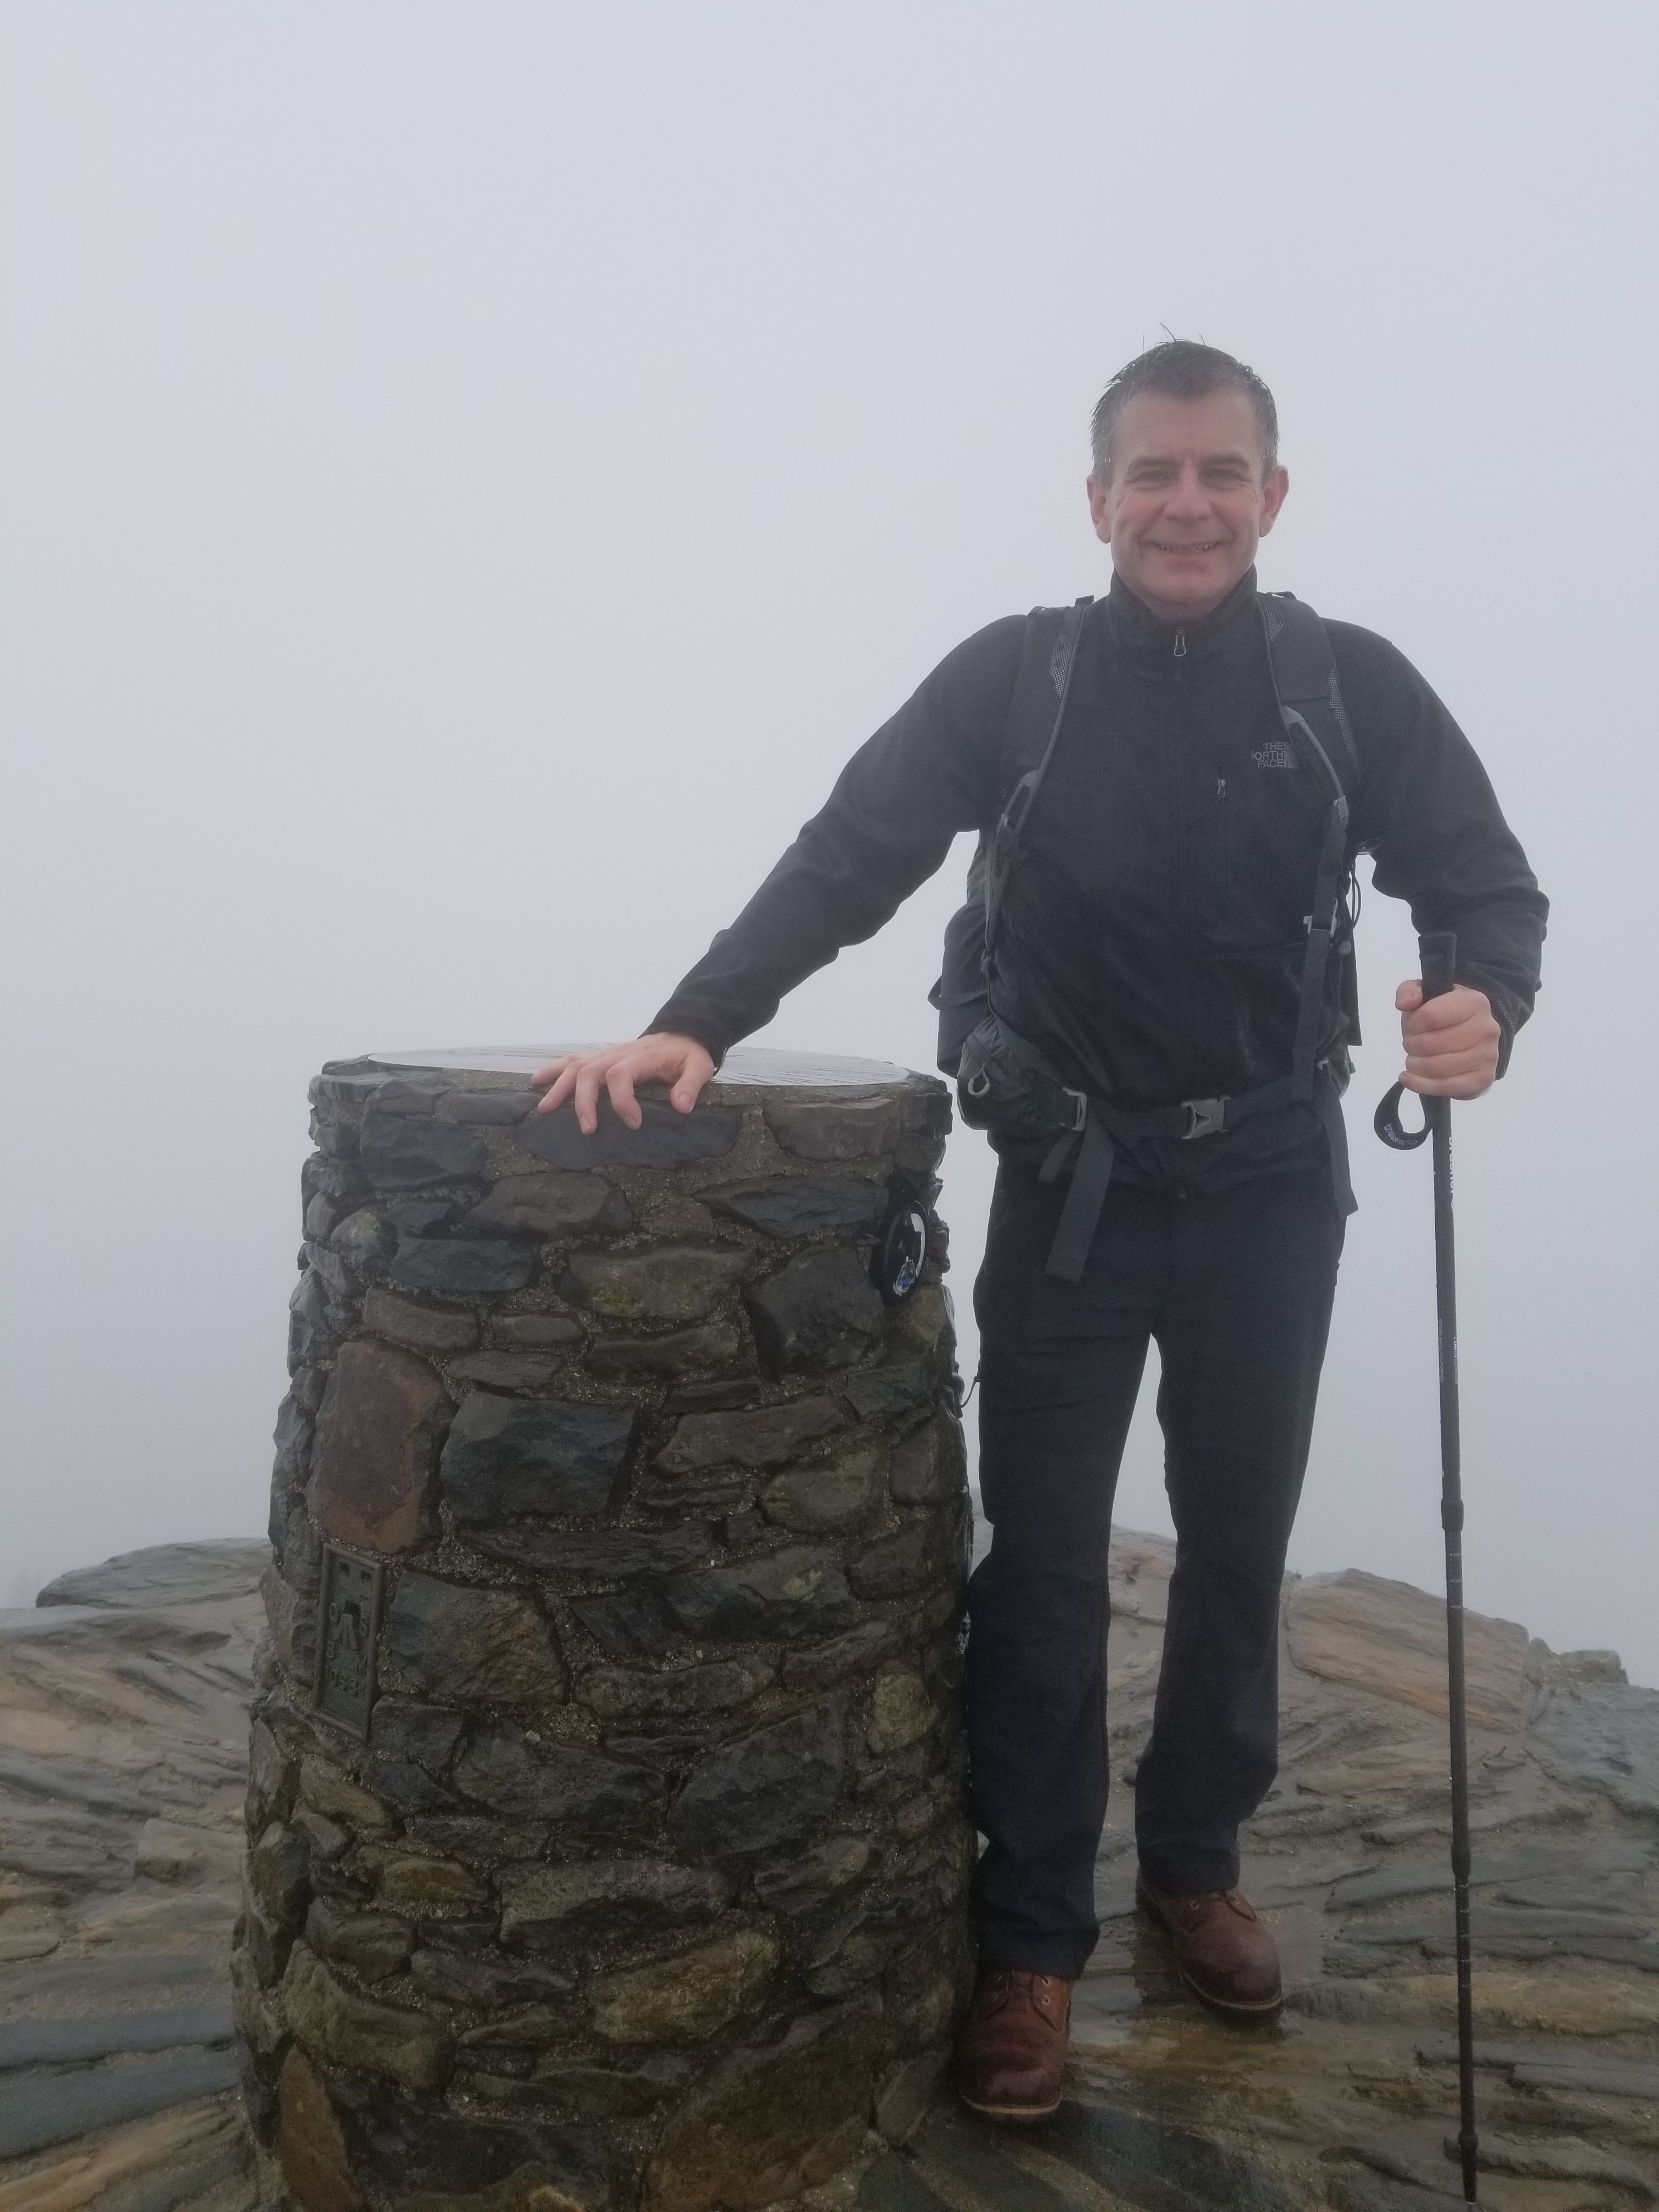 Nigel Yates on the summit of Mount Snowdon